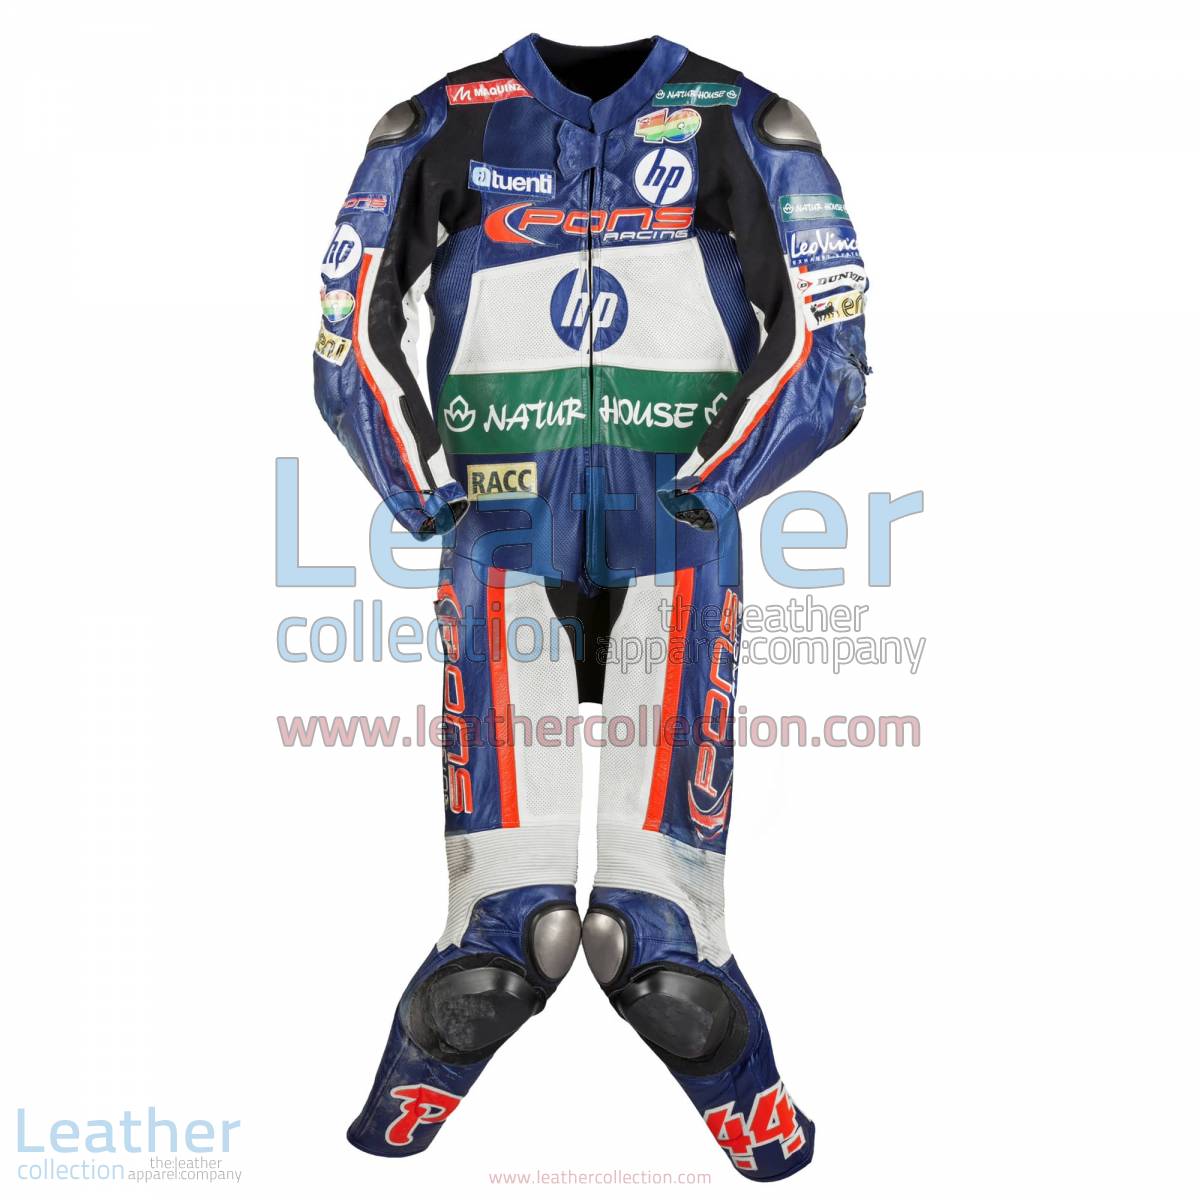 Pol Espargaro Kalex 2012 Motorcycle Racing Suit